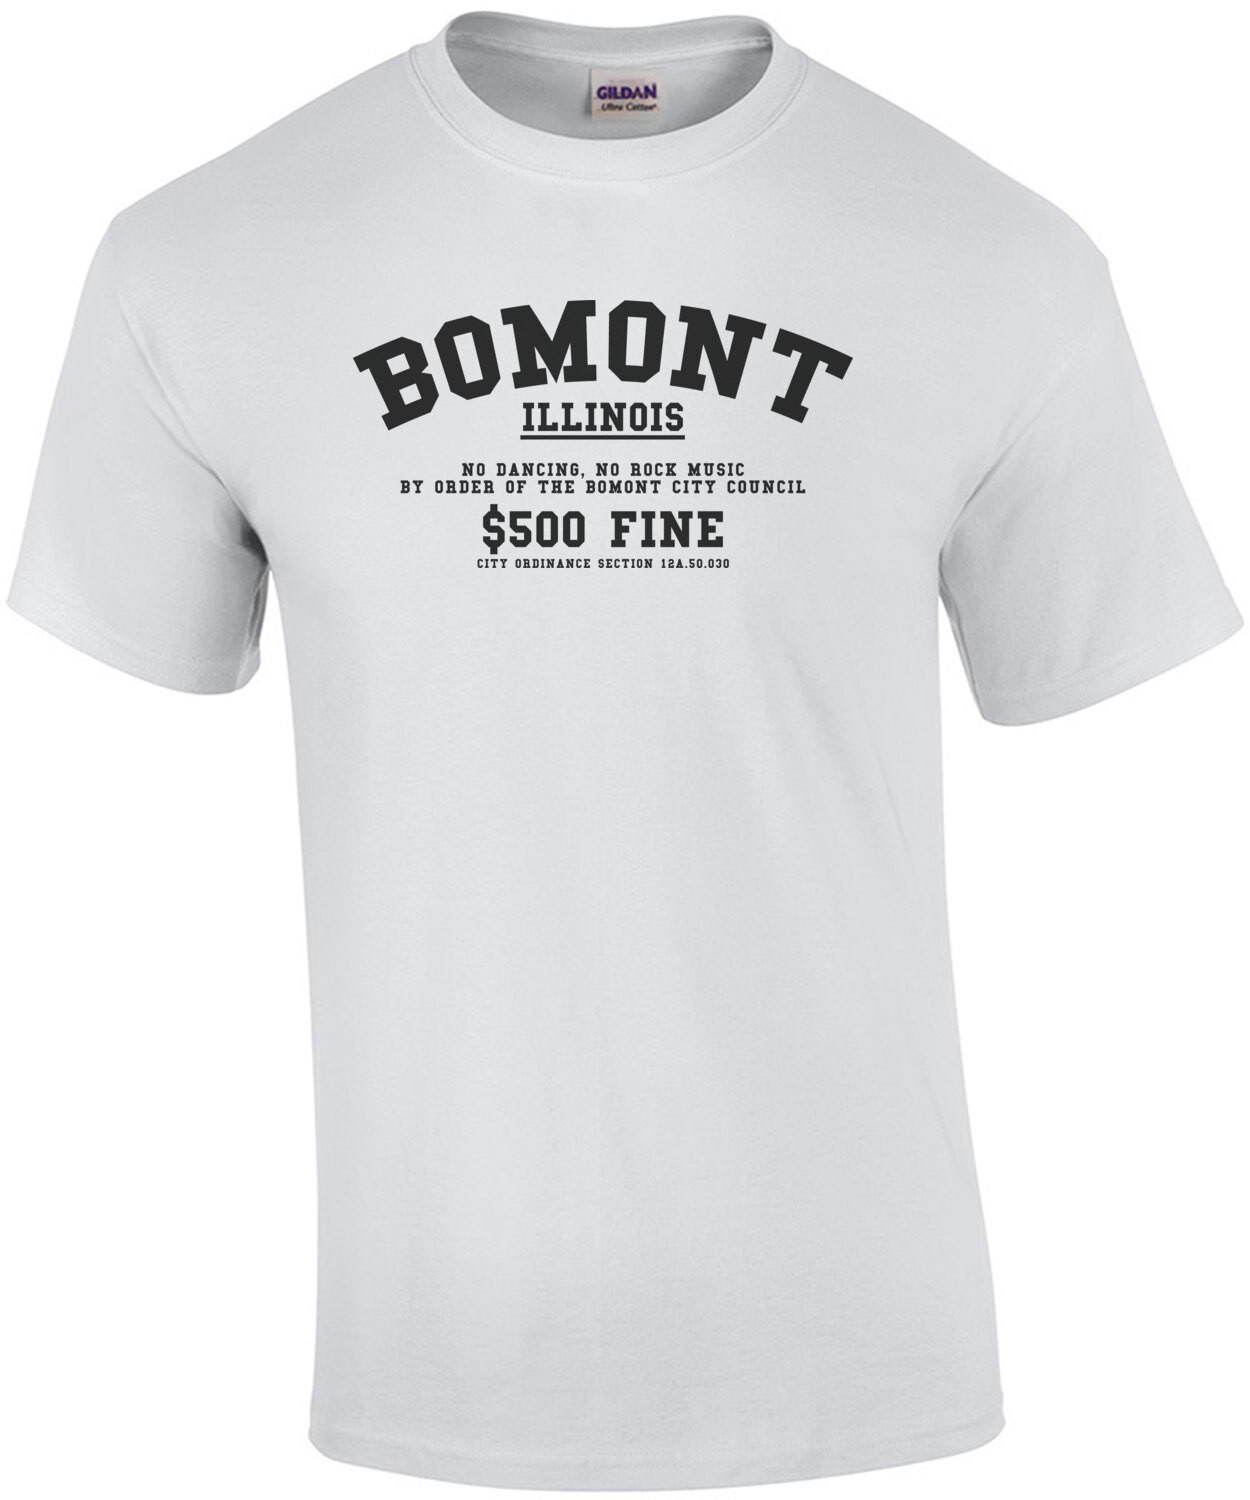 Bomont Illinois - No Dancing, No Rock Mysic By order of Bomont City Council $500 fine - Footloose 80's T-Shirt